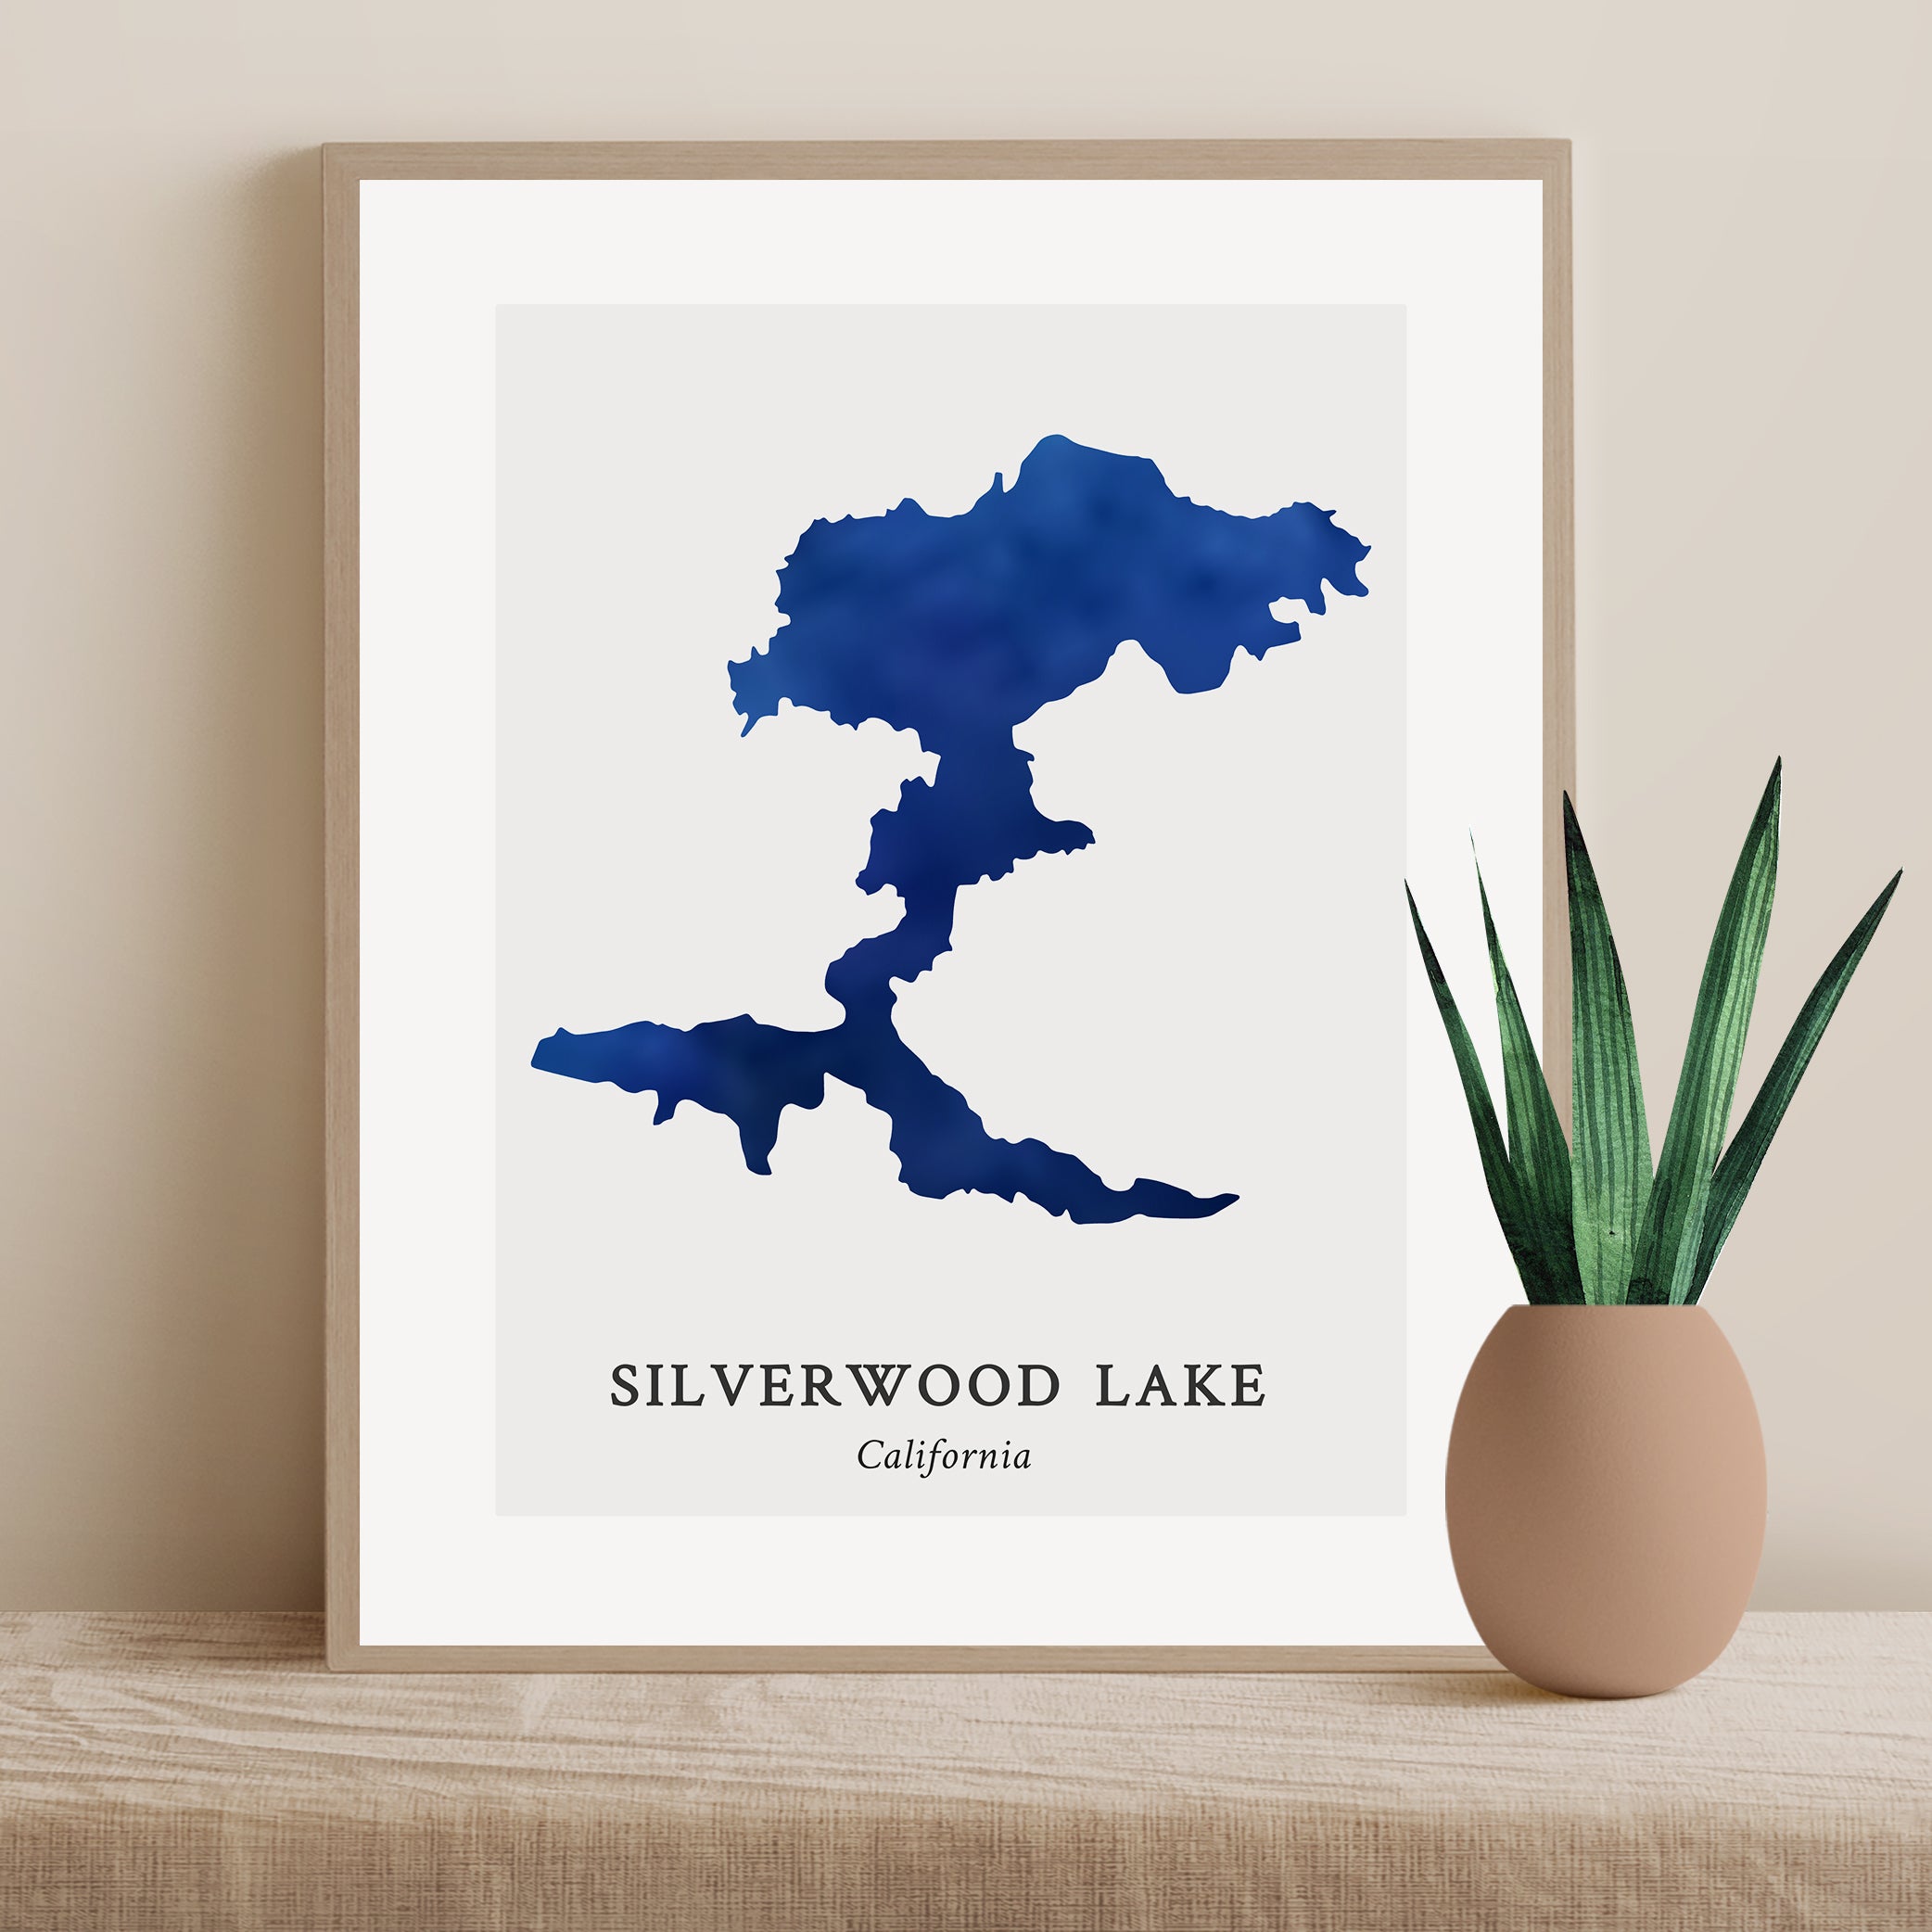 California - Silverwood Lake